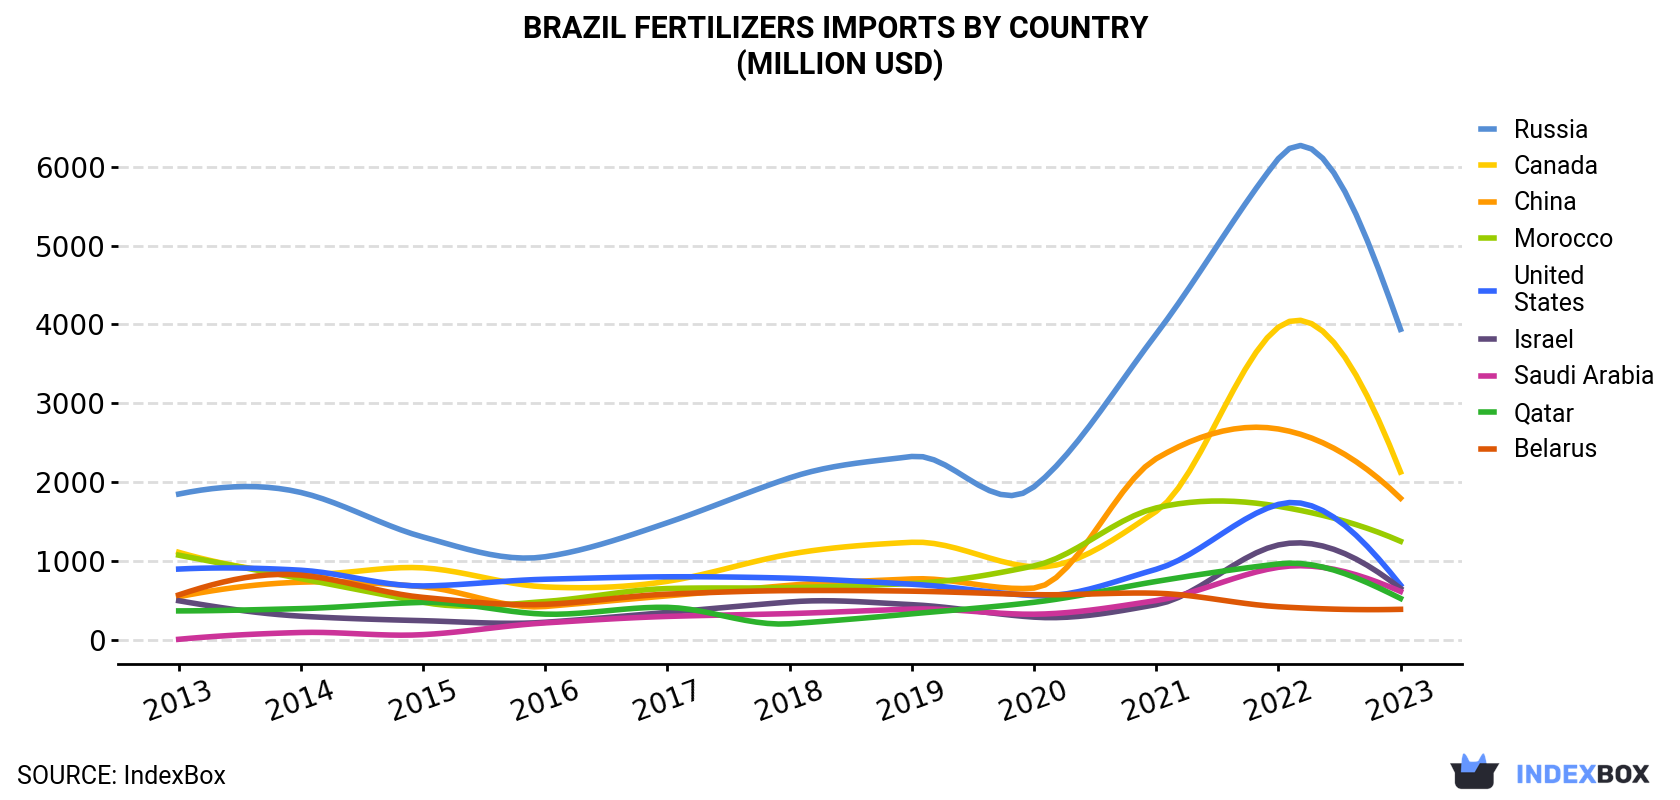 Brazil Fertilizers Imports By Country (Million USD)